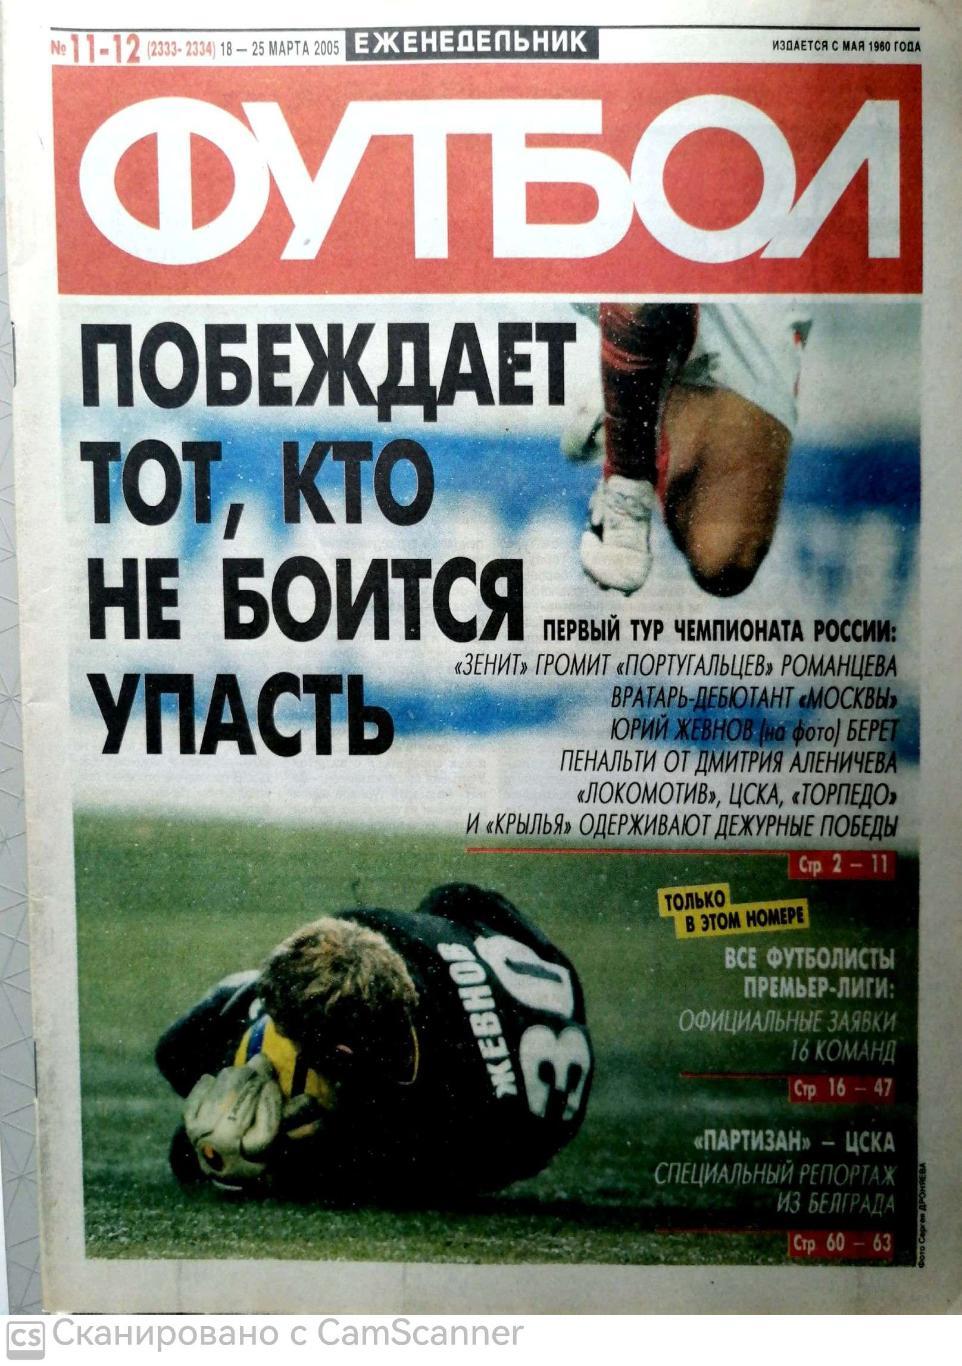 Еженедельник «Футбол» (Москва). 2005 год. №11-12